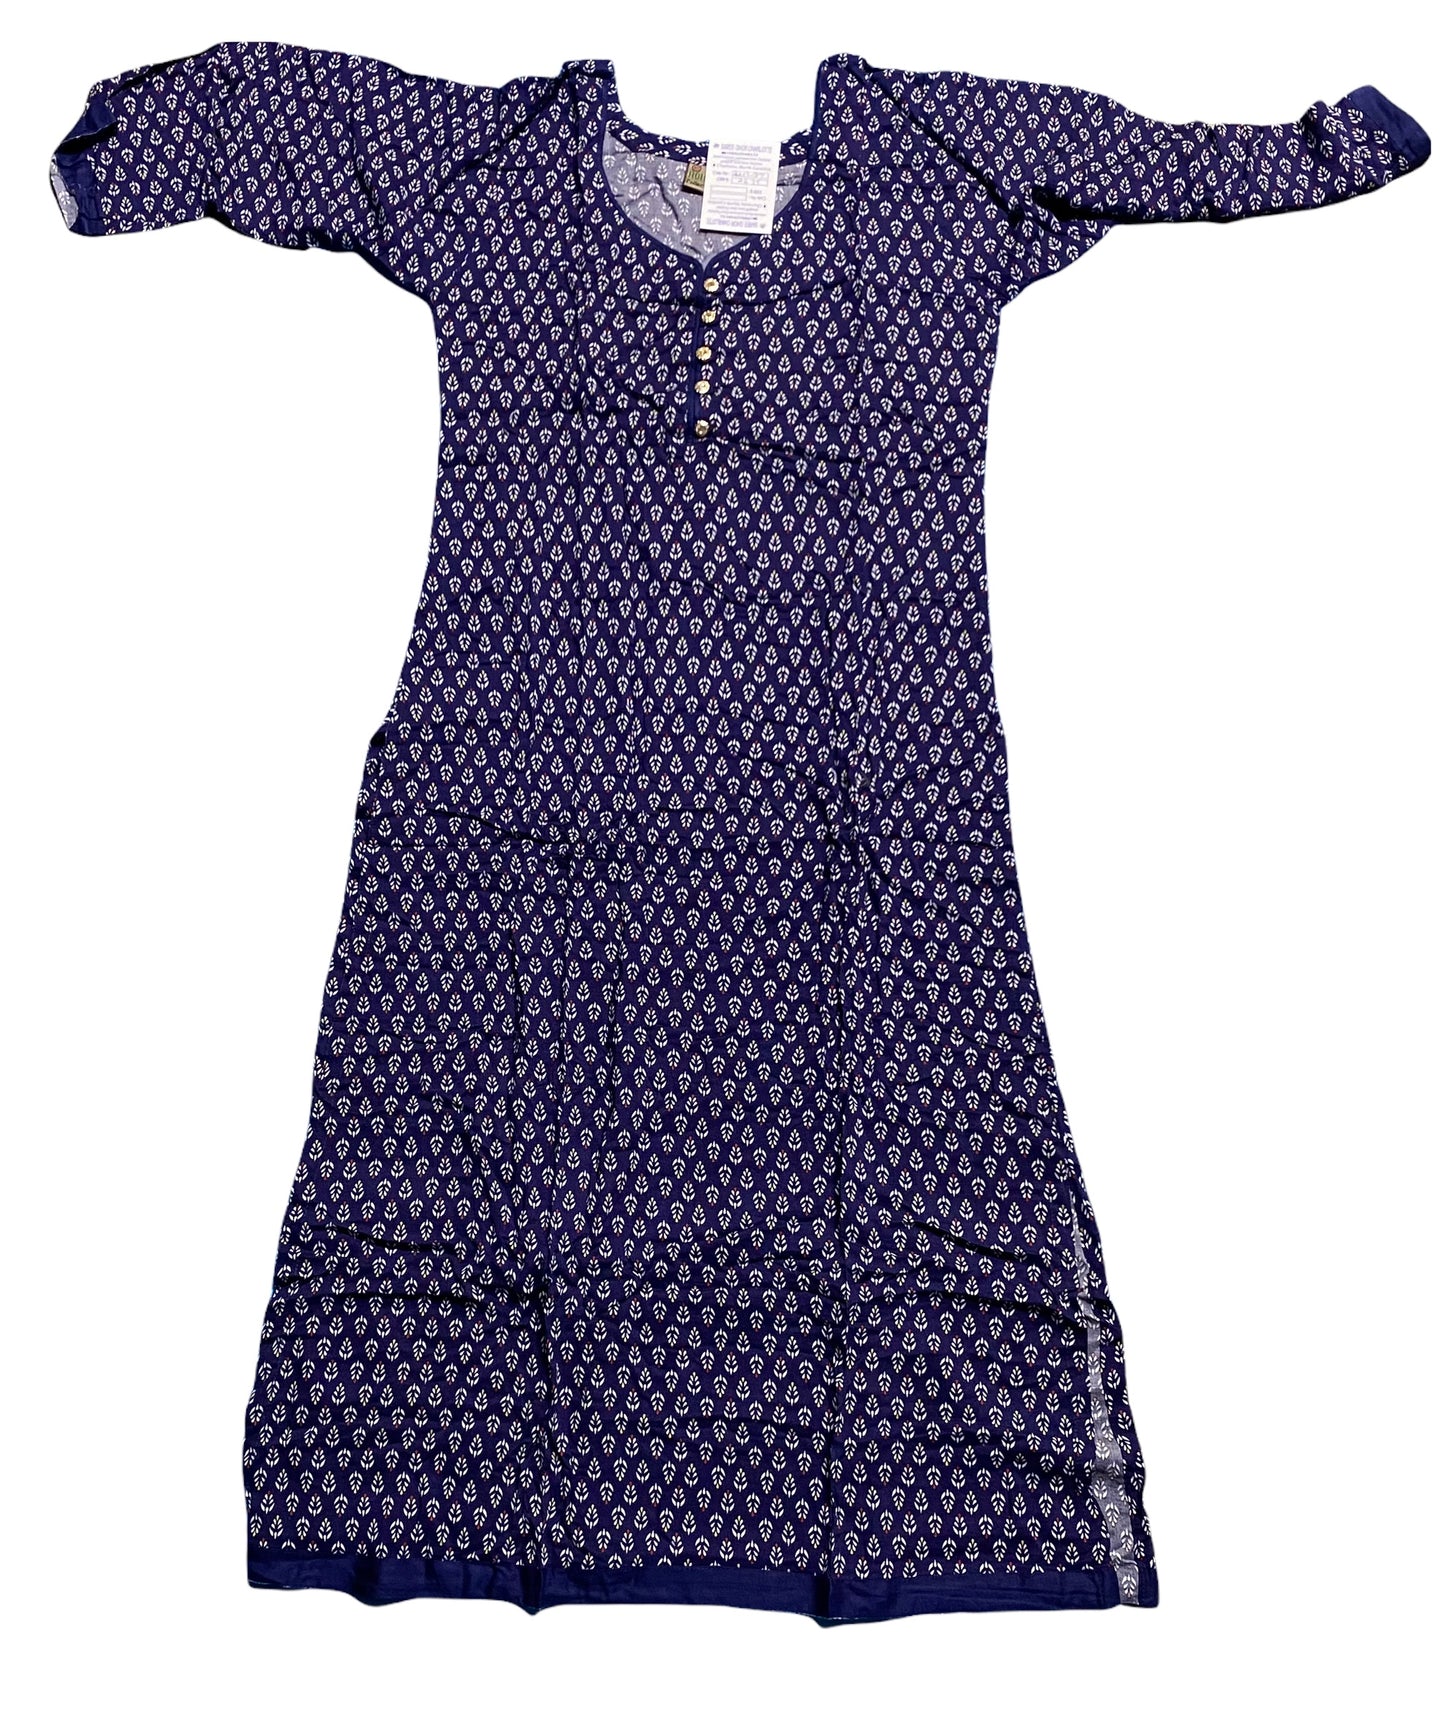 Everyday Comfort: Linen Long Sleeve Salwar Kameez for Daily Wear